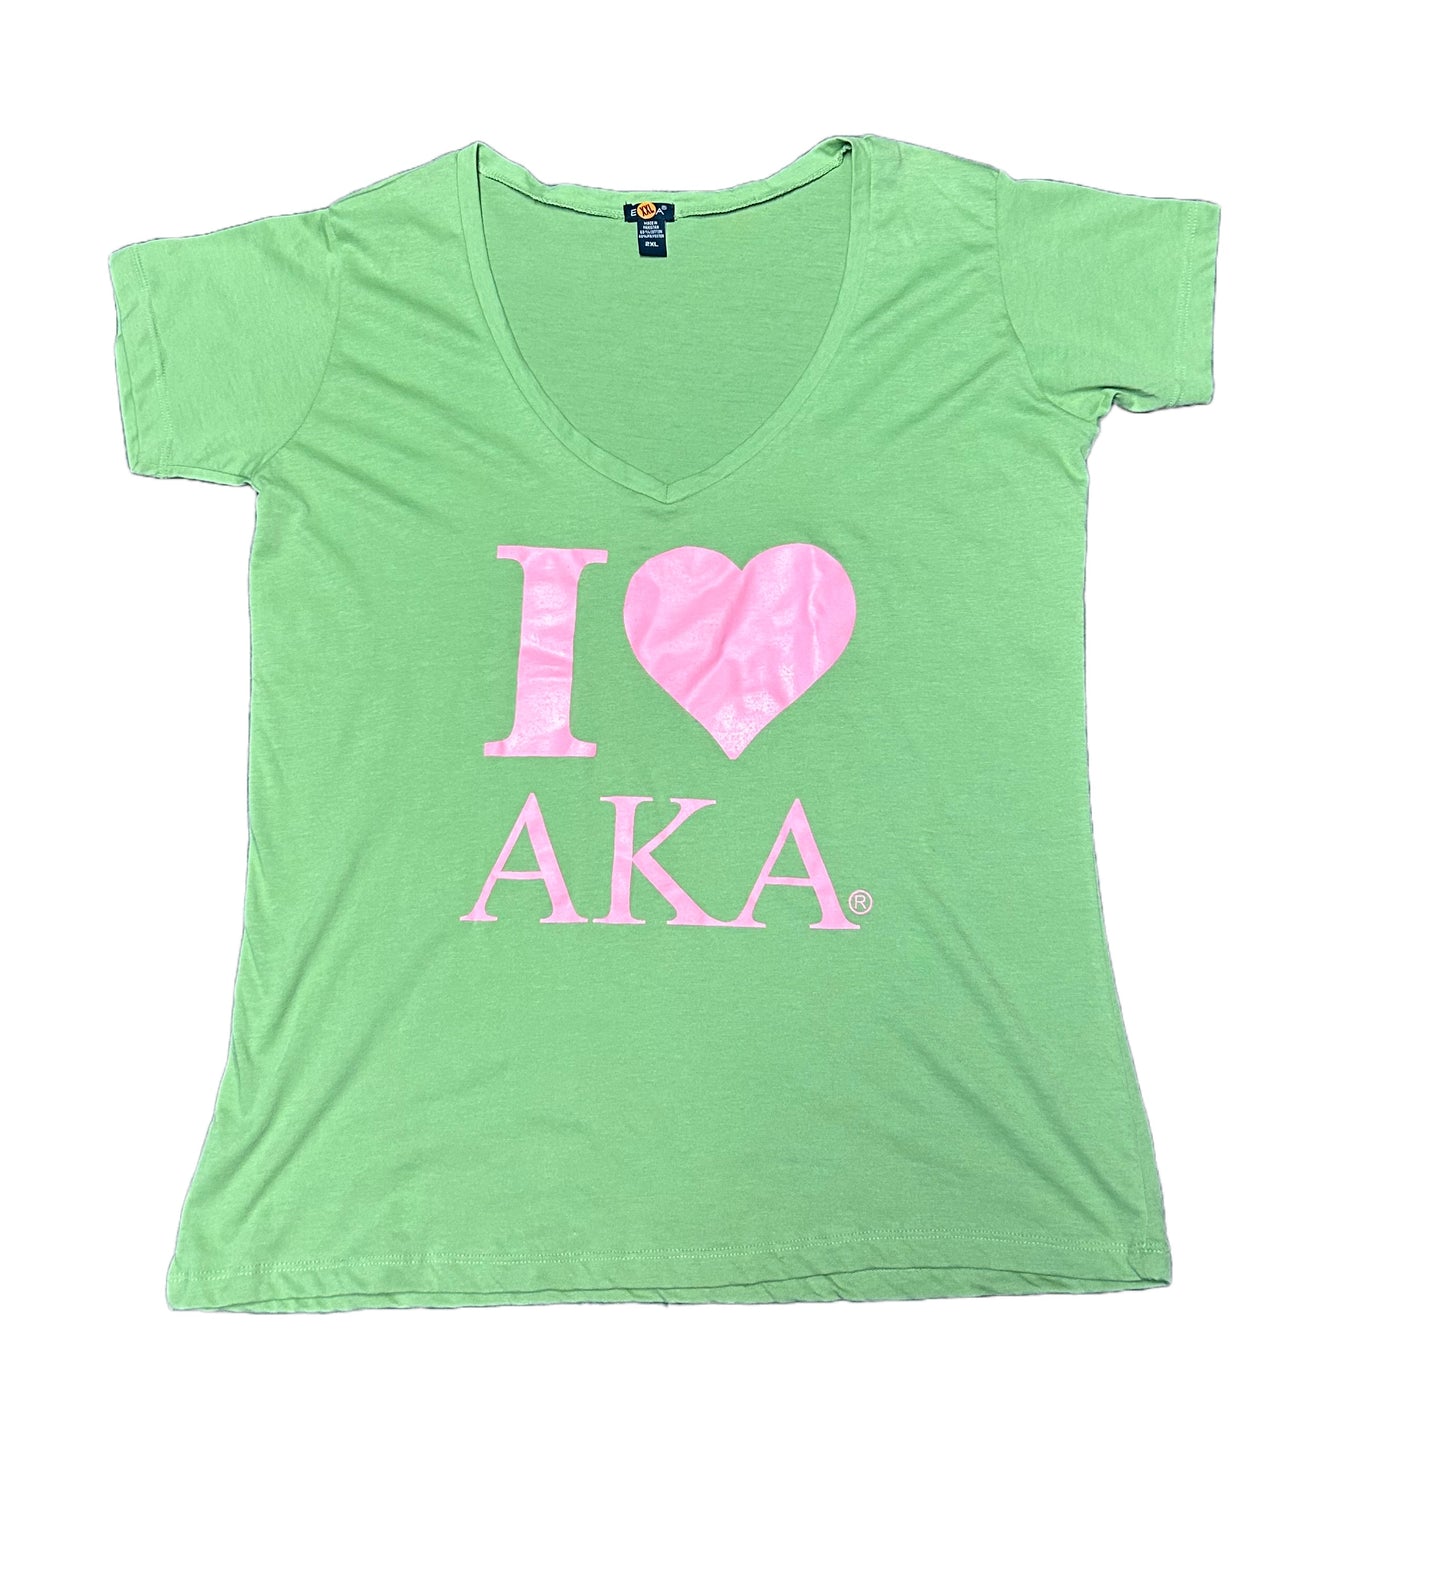 AKA T-Shirt - I Heart AKA, Lime Green